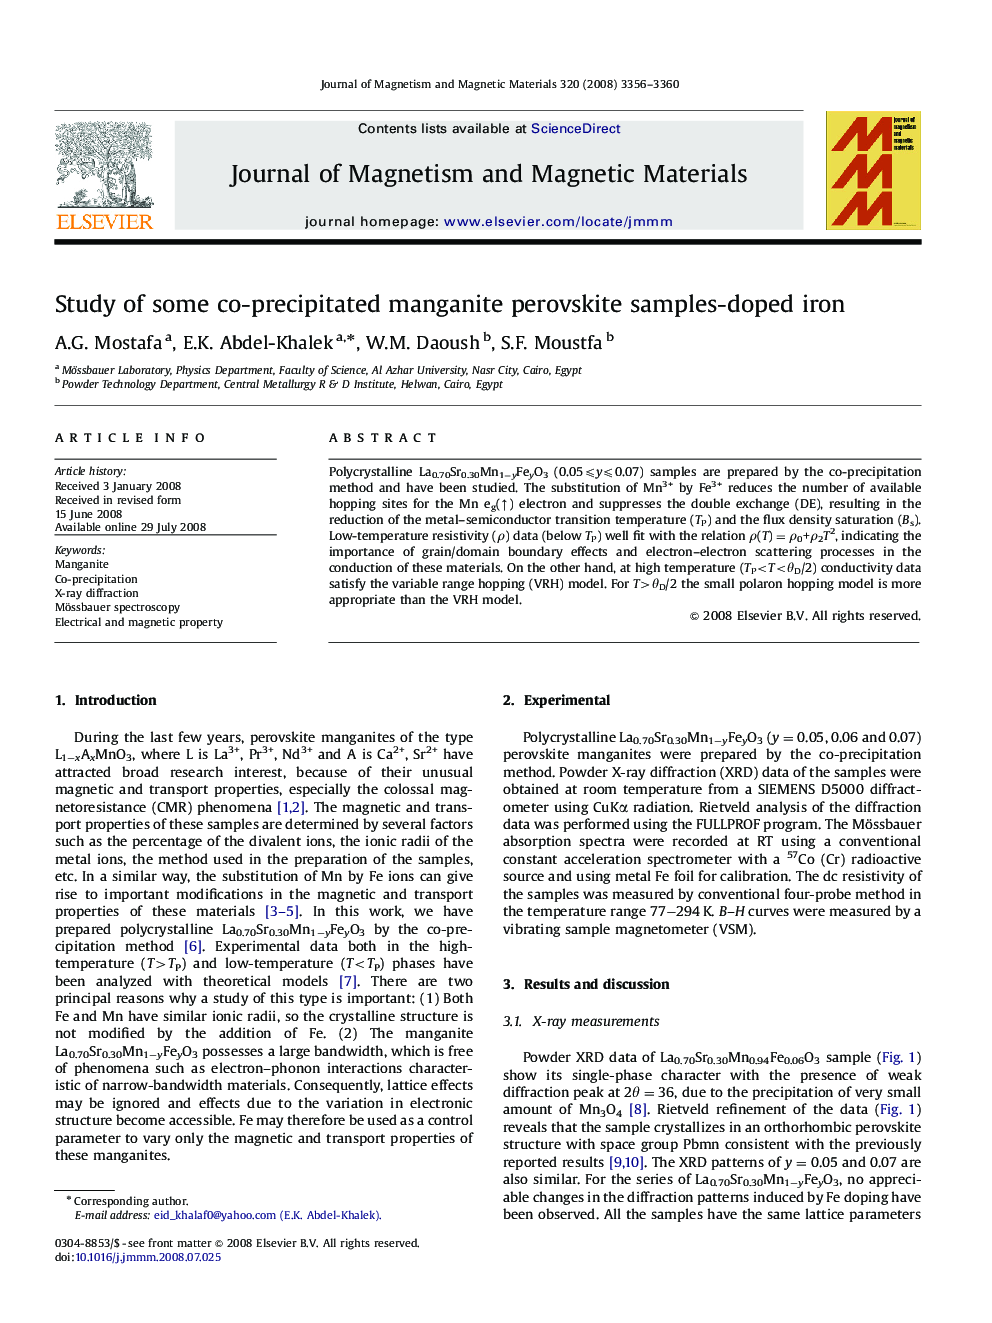 Study of some co-precipitated manganite perovskite samples-doped iron